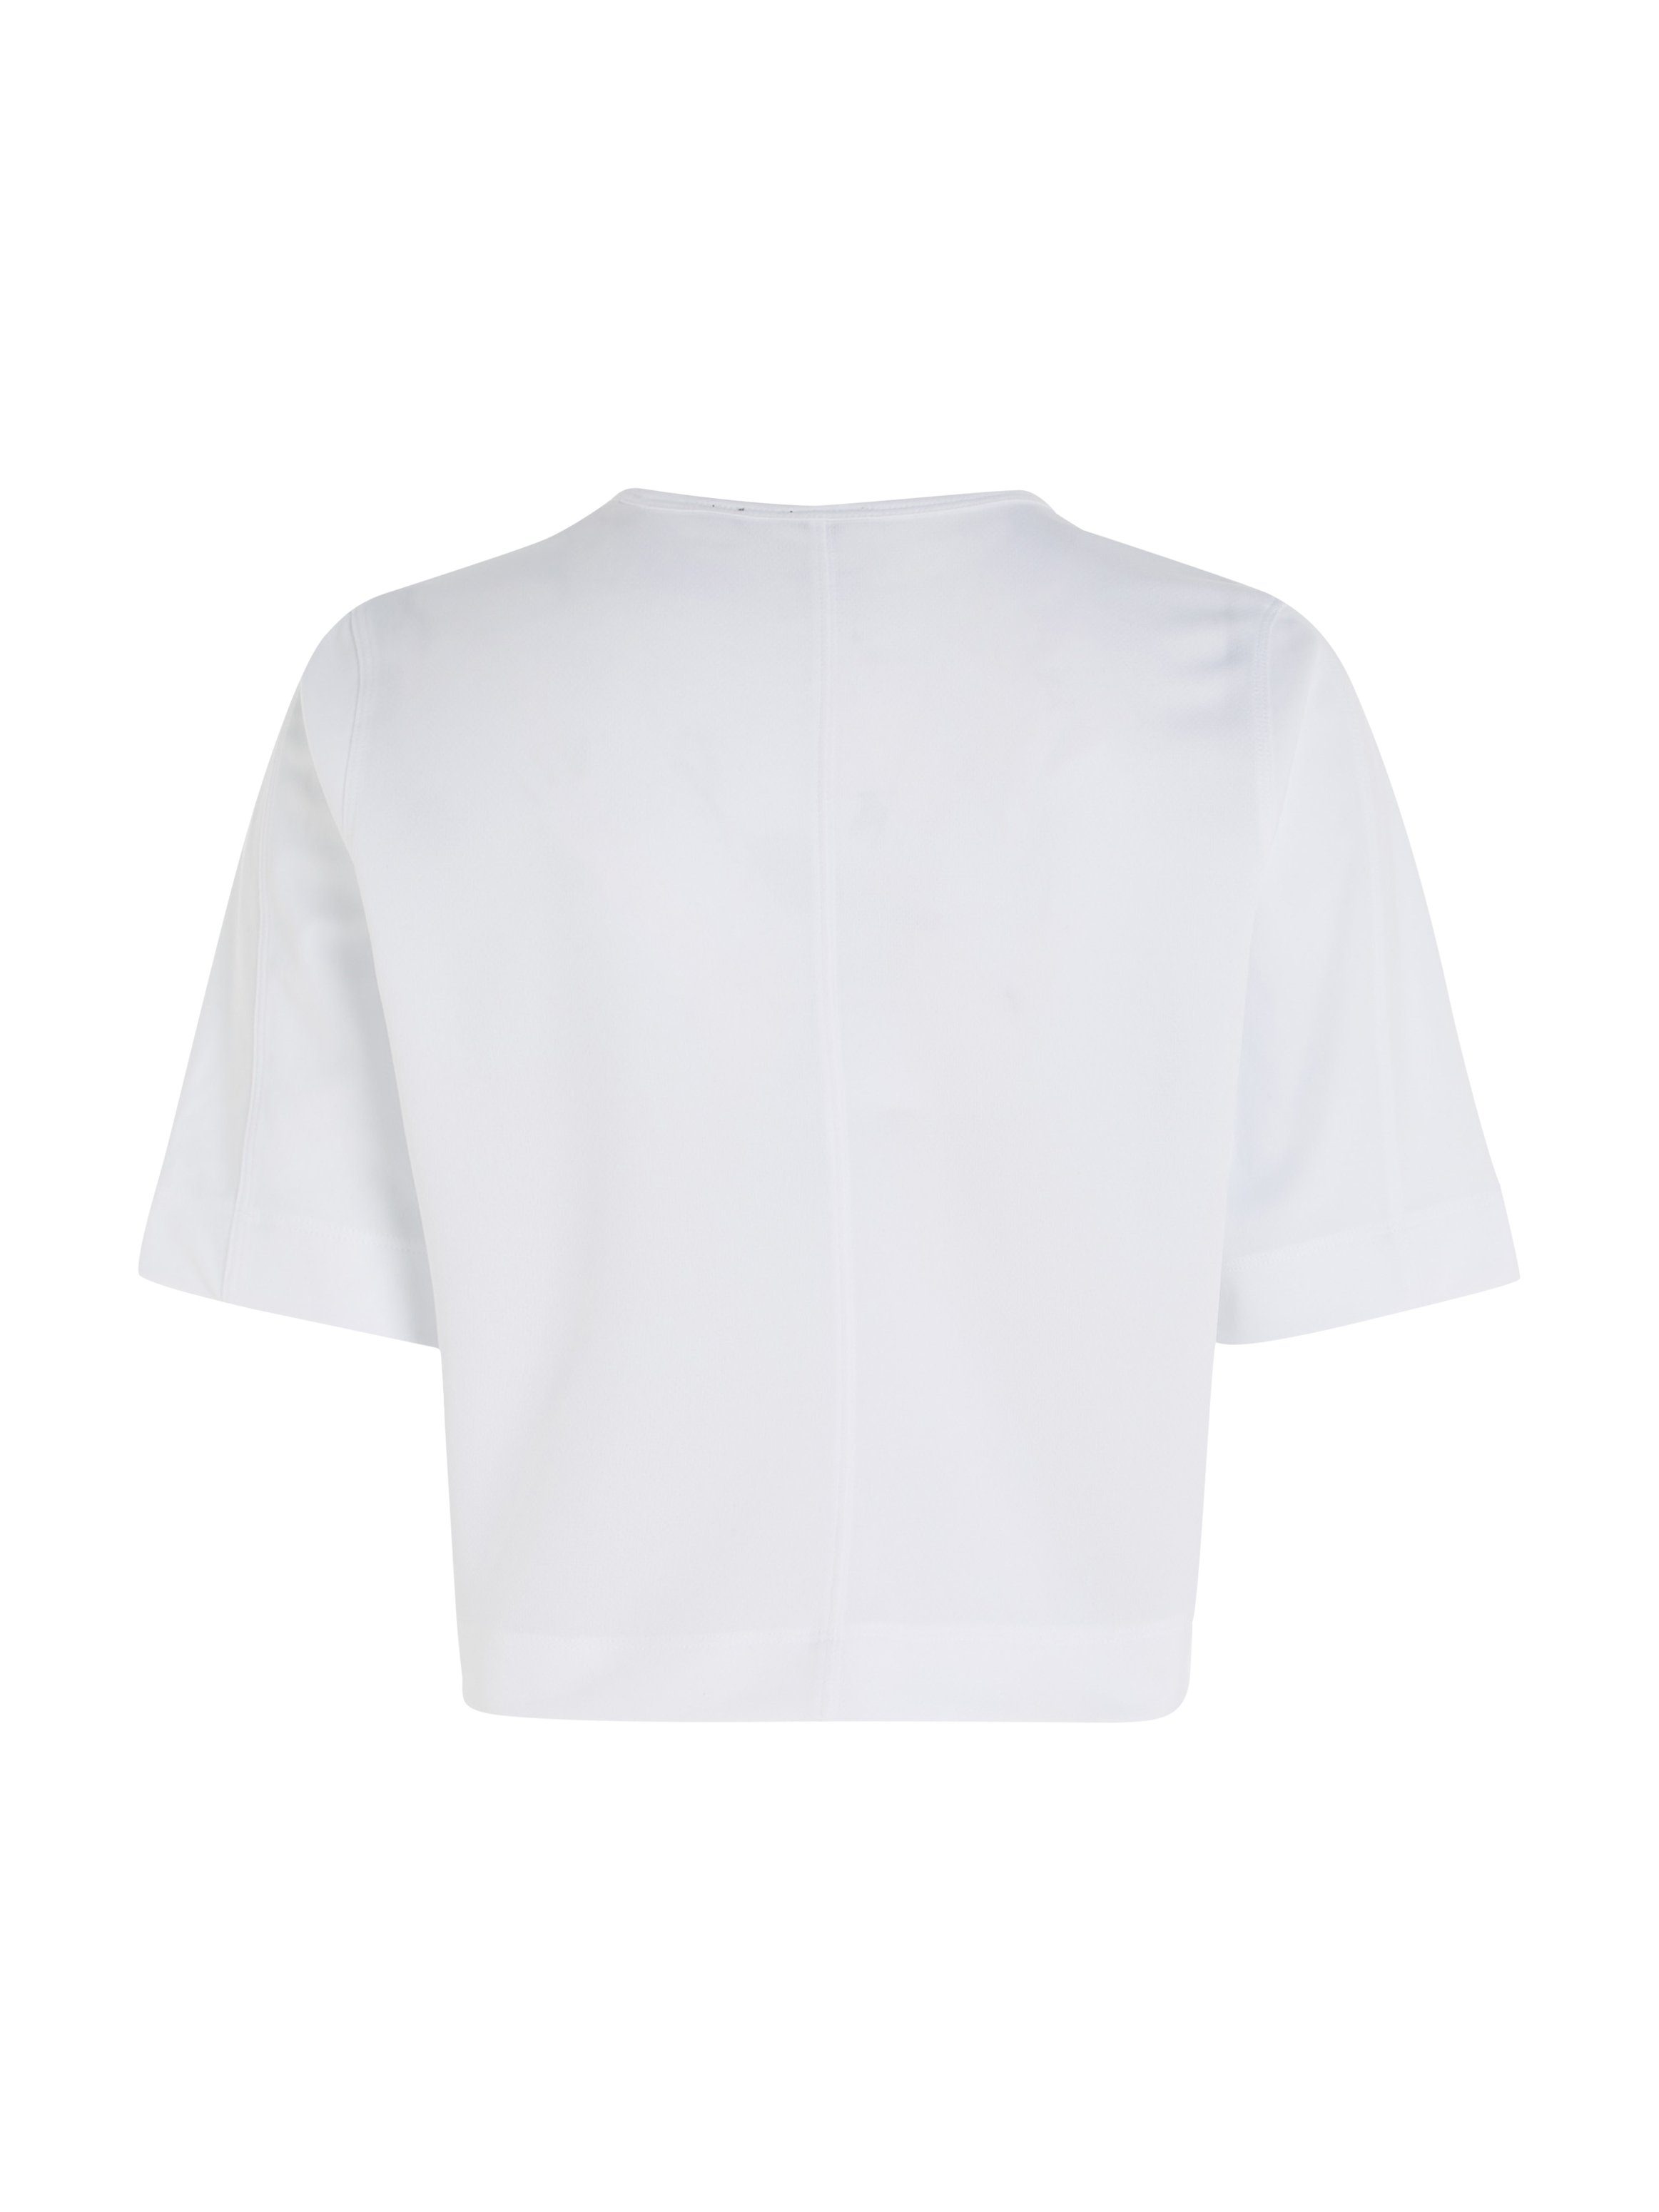 Calvin Klein Sport White T-Shirt Bright